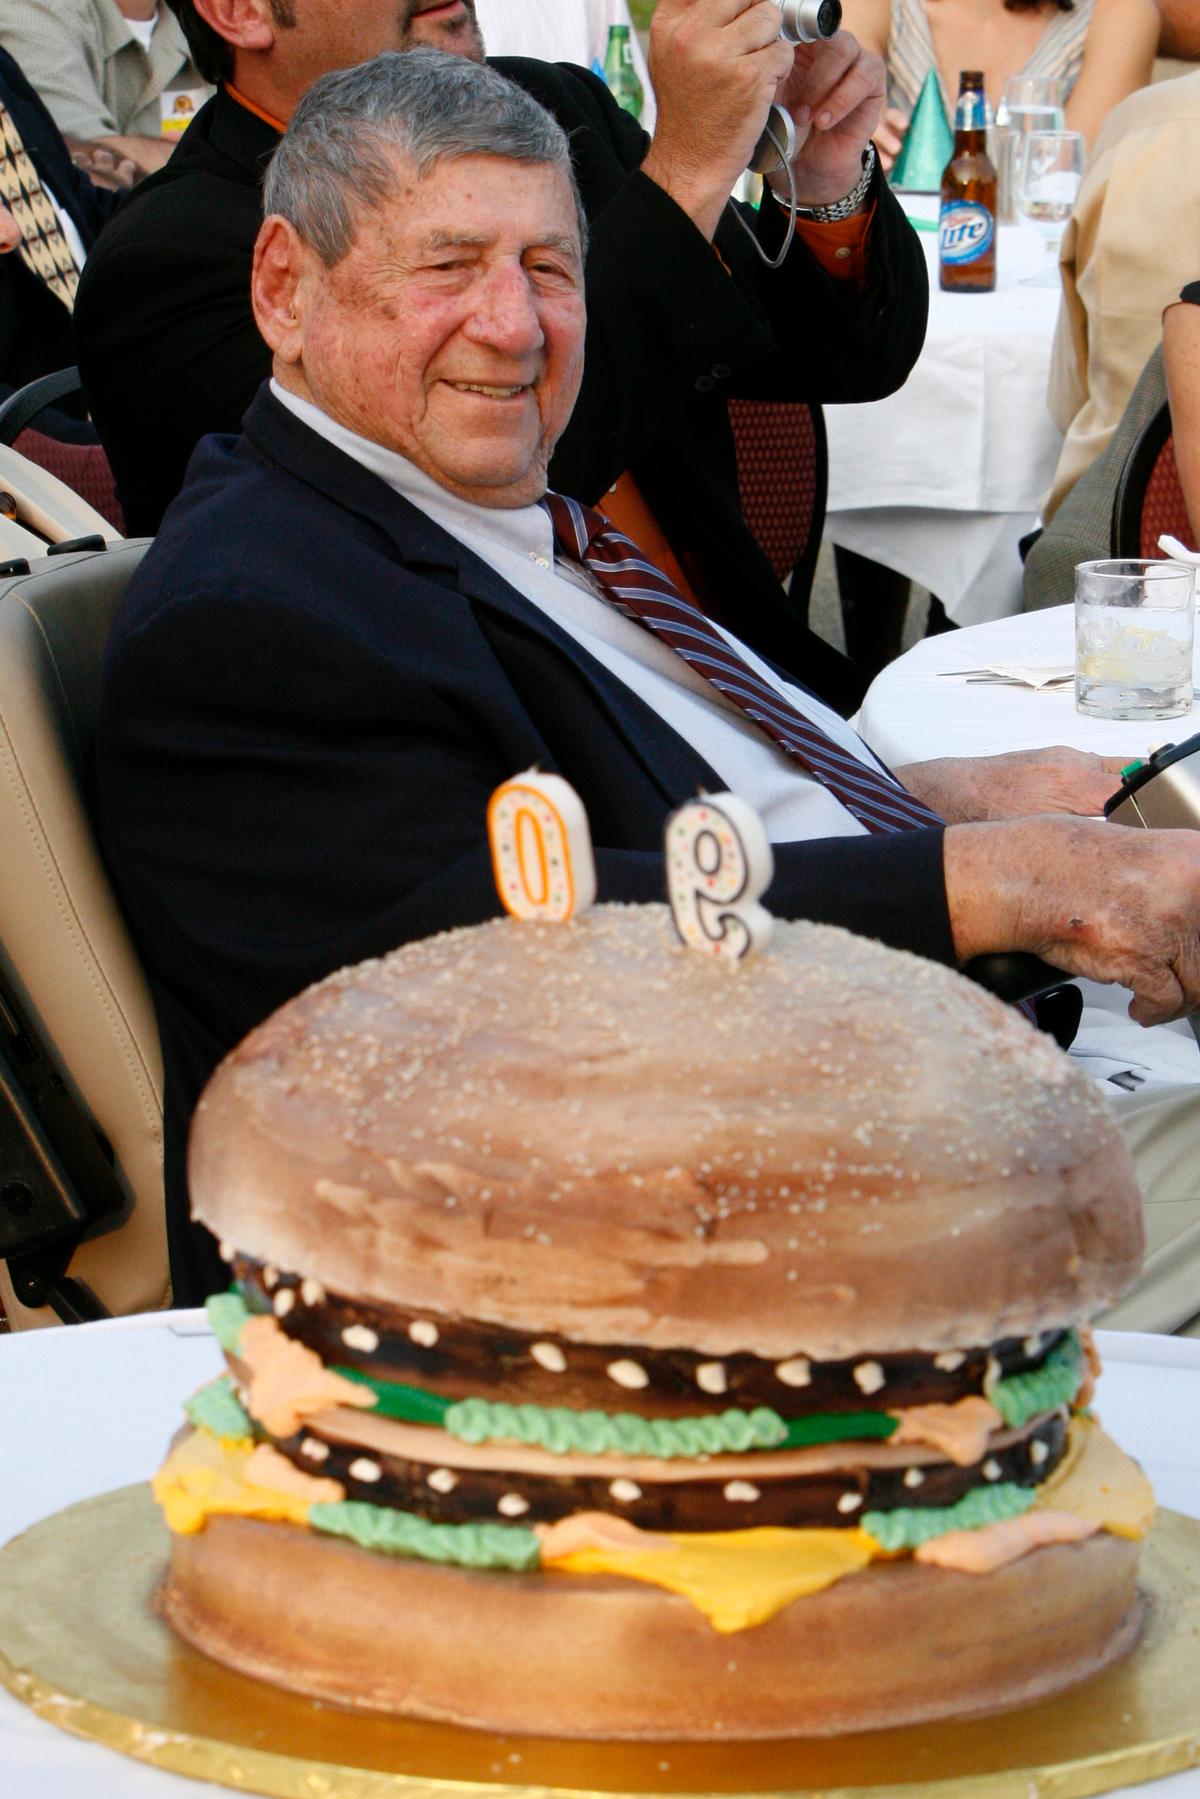 Big Mac creator Michael "Jim" Delligatti attends his 90th birthday party in Canonsburg, Pa., on Aug. 21, 2008. (AP Photo/Gene J. Puskar, File)